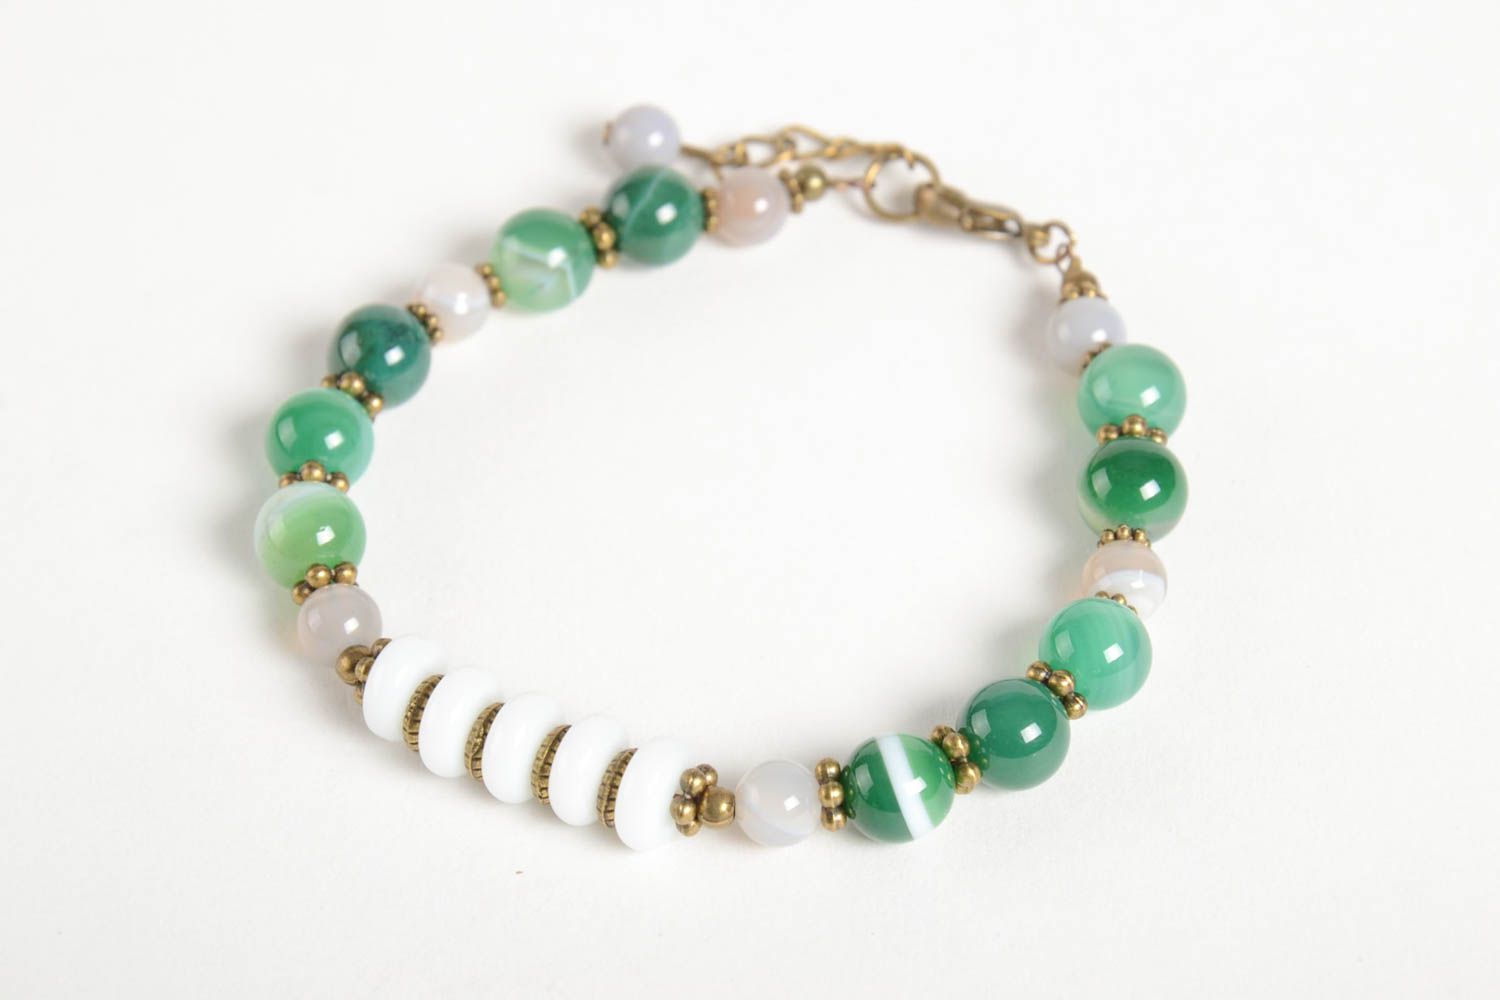 Beautiful handmade stone bracelet artisan jewelry designs gifts for her photo 5